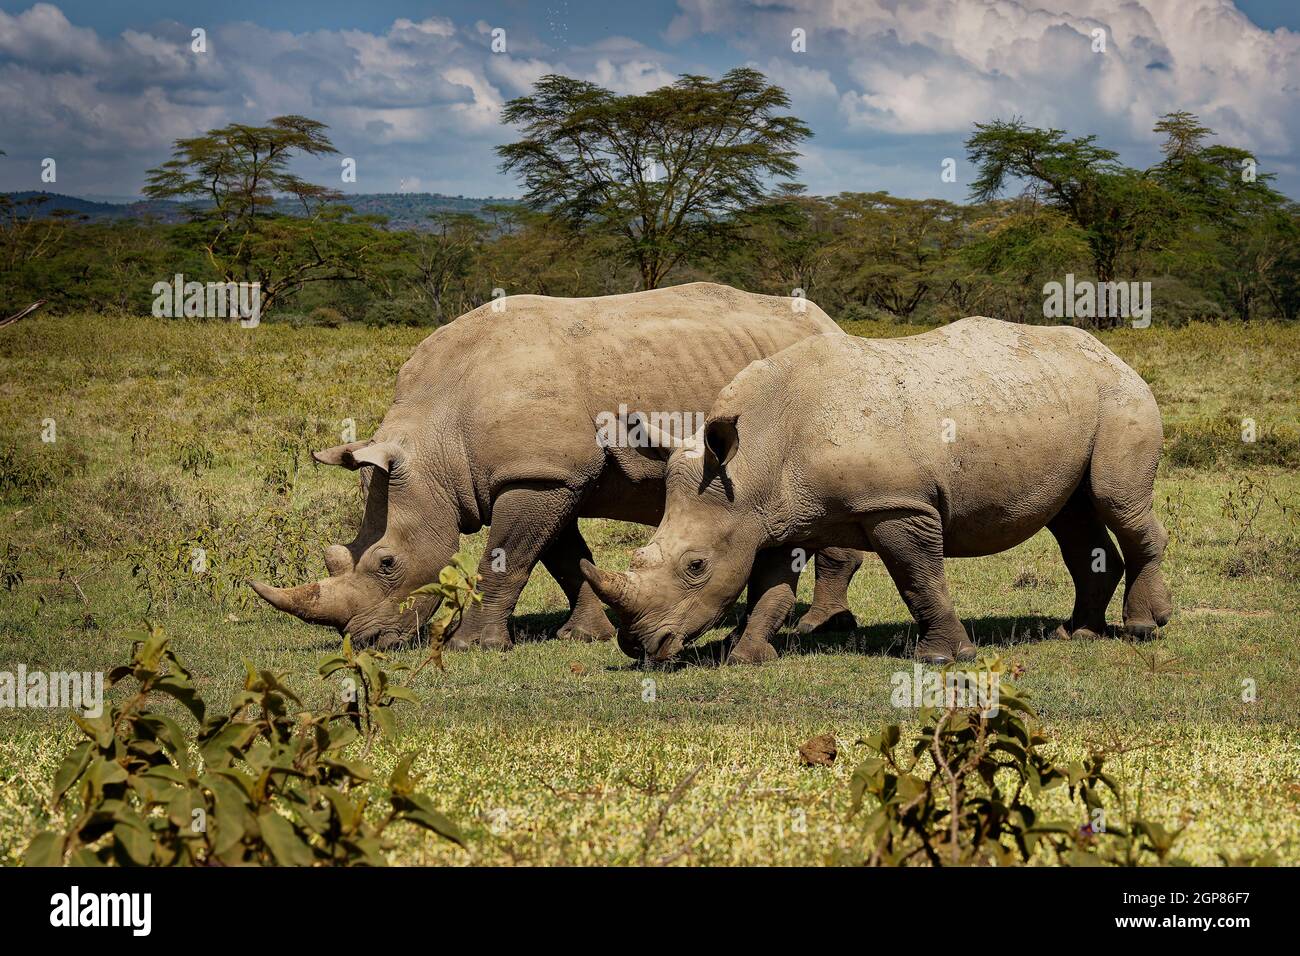 Rinoceronte bianco meridionale o rinoceronte quadrato - Ceratotherium simum simum, nel Parco Nazionale del Lago Nakuru in Kenya, coppia di cibo rinoceronte cornuto Foto Stock